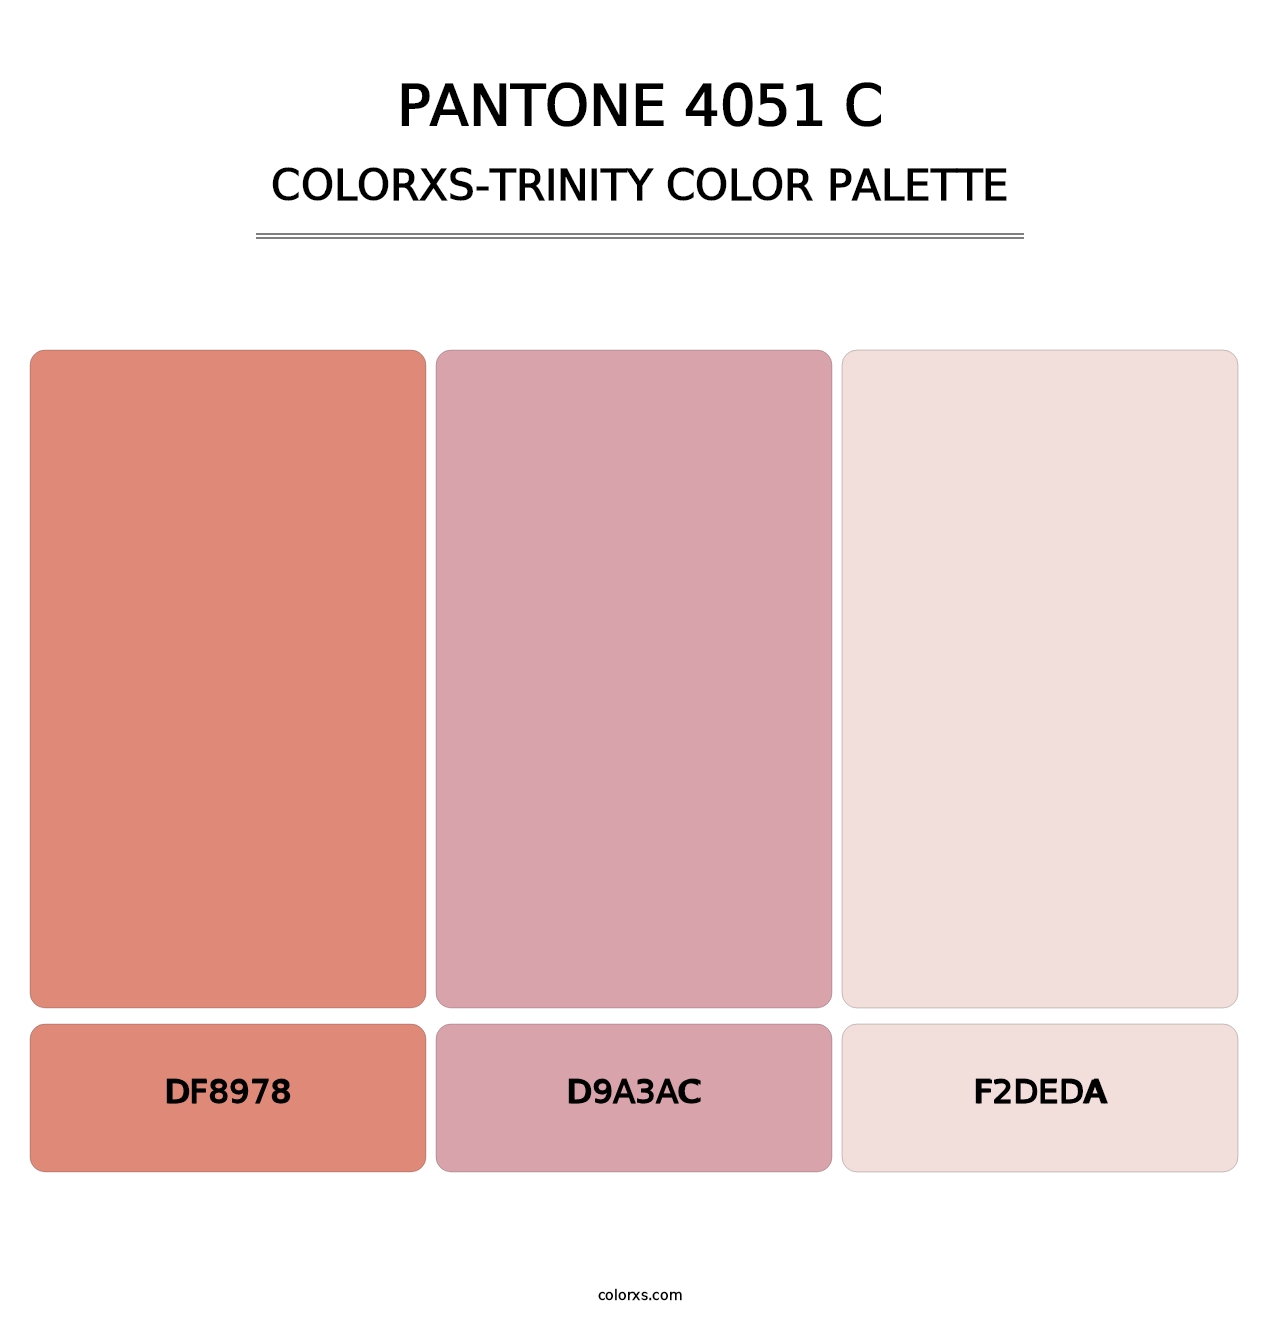 PANTONE 4051 C - Colorxs Trinity Palette